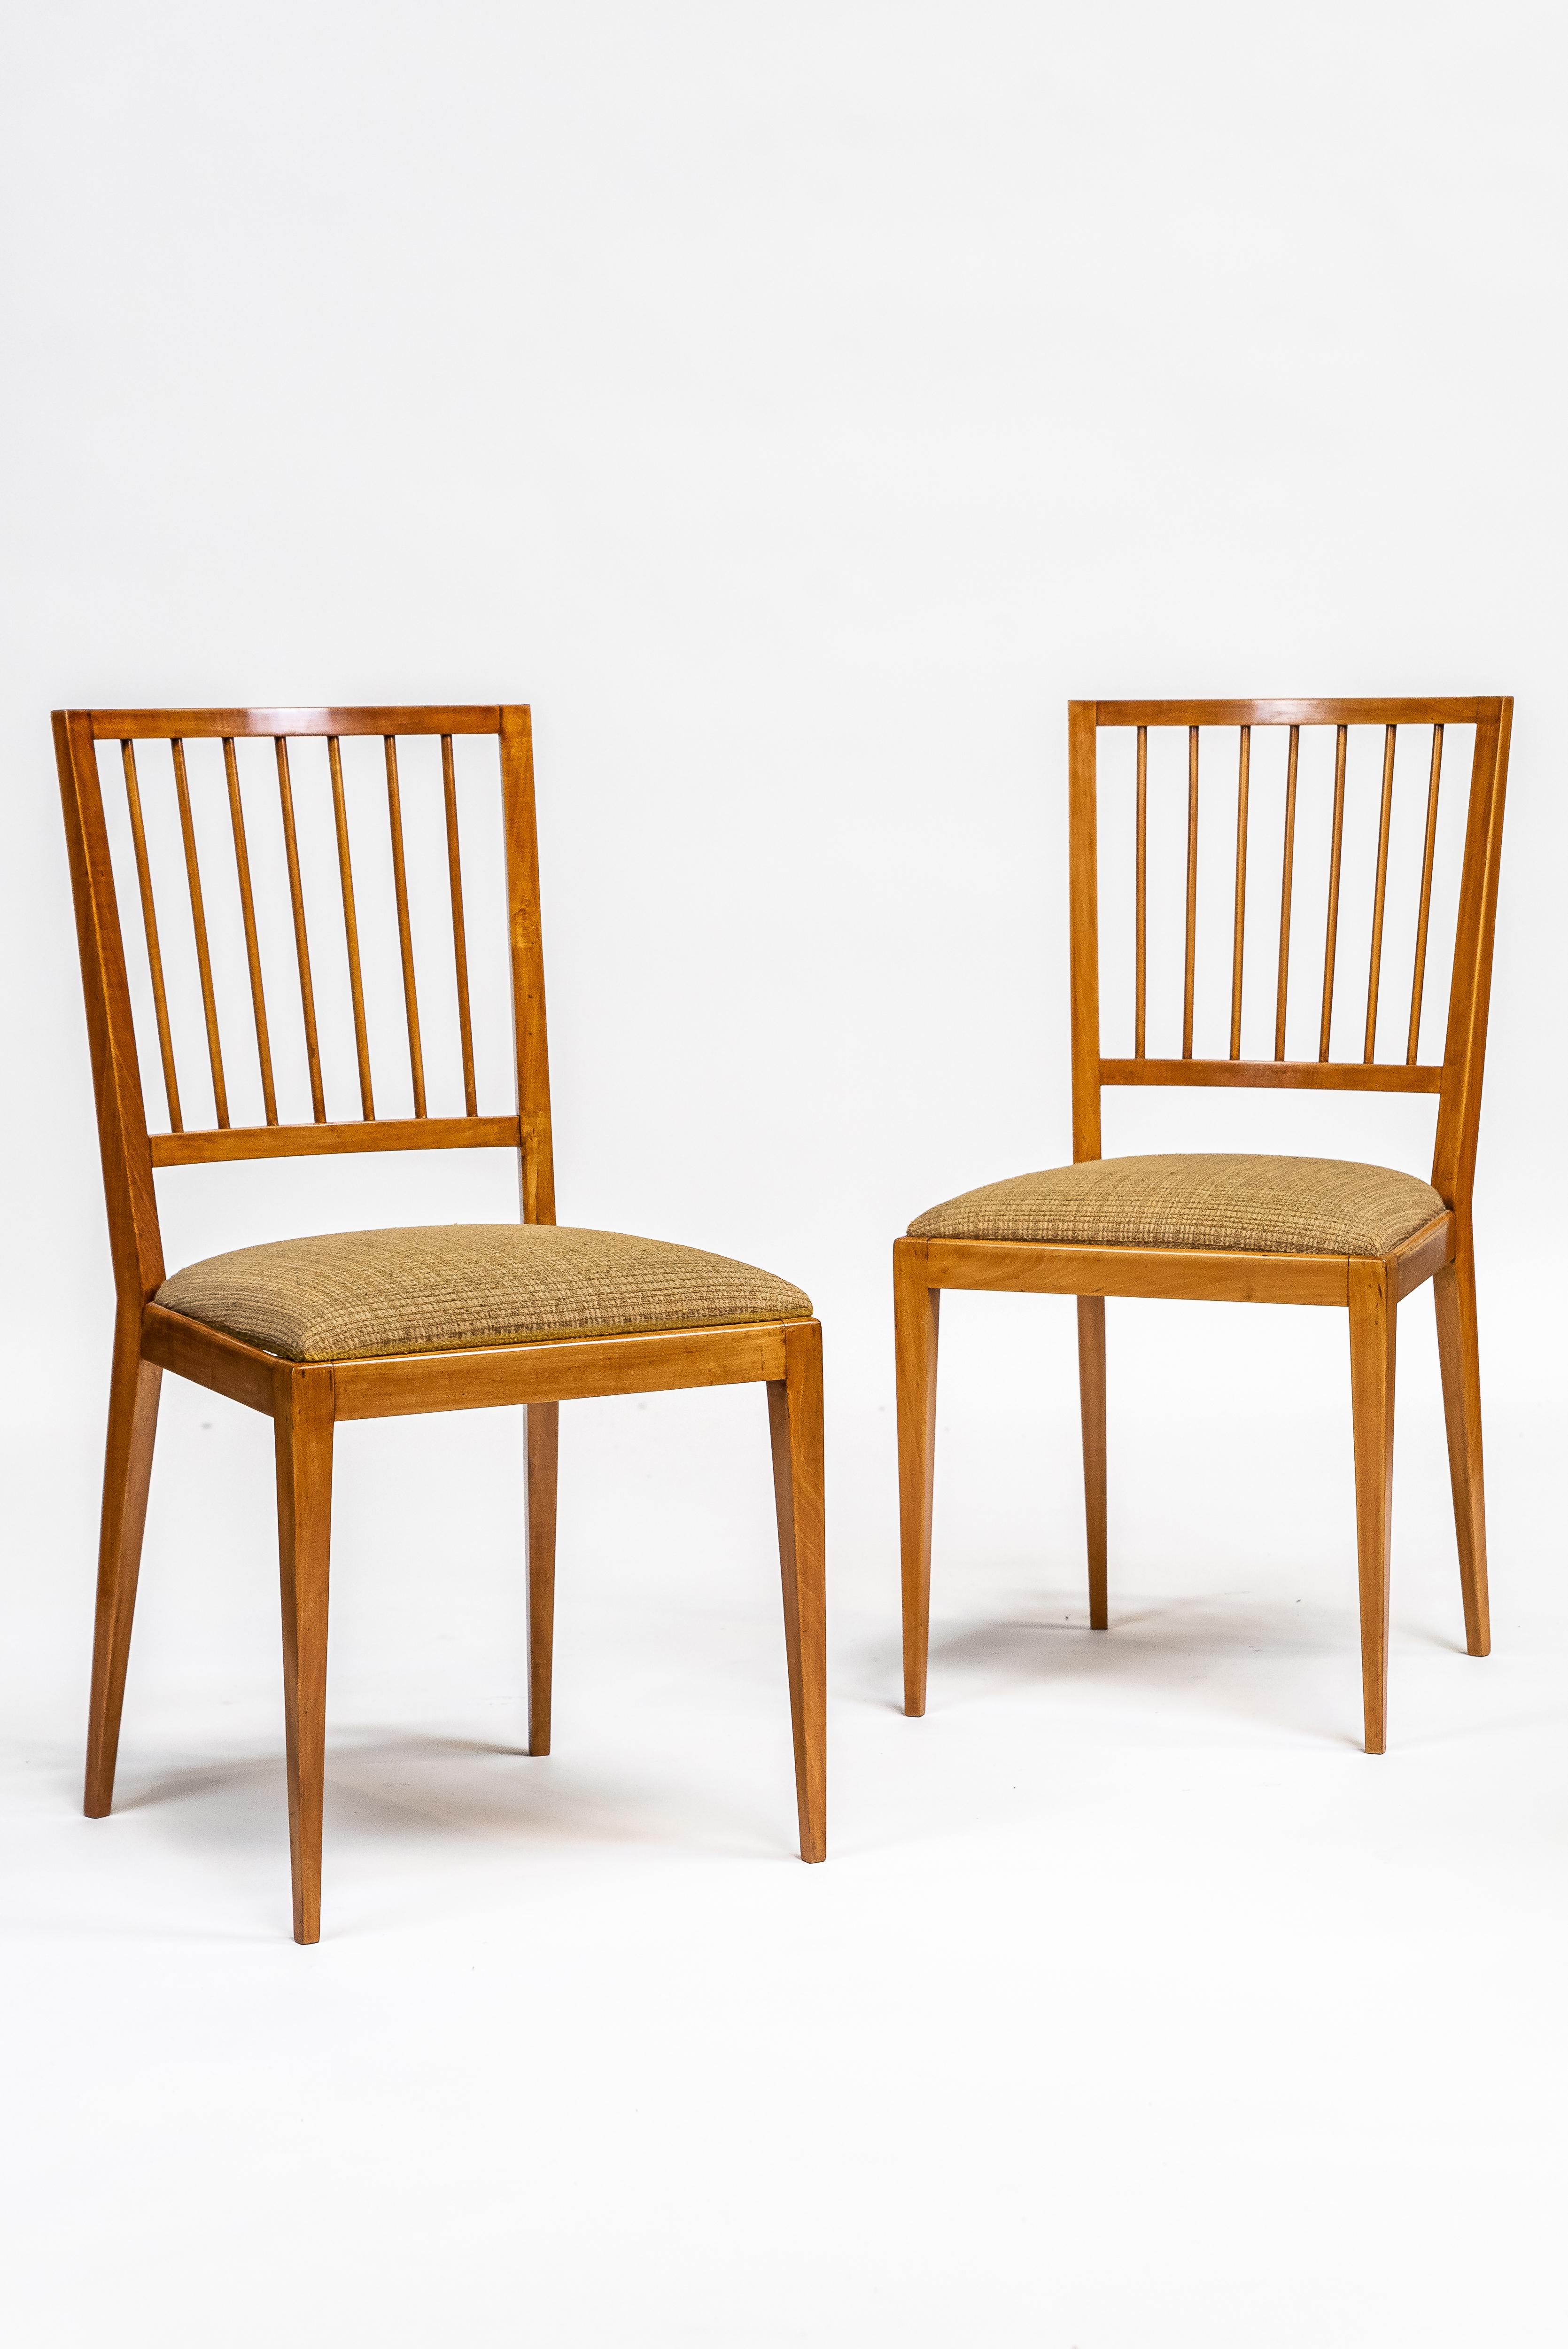 Brazilian Joaquim Tenreiro, Set 6 Chairs, 1950